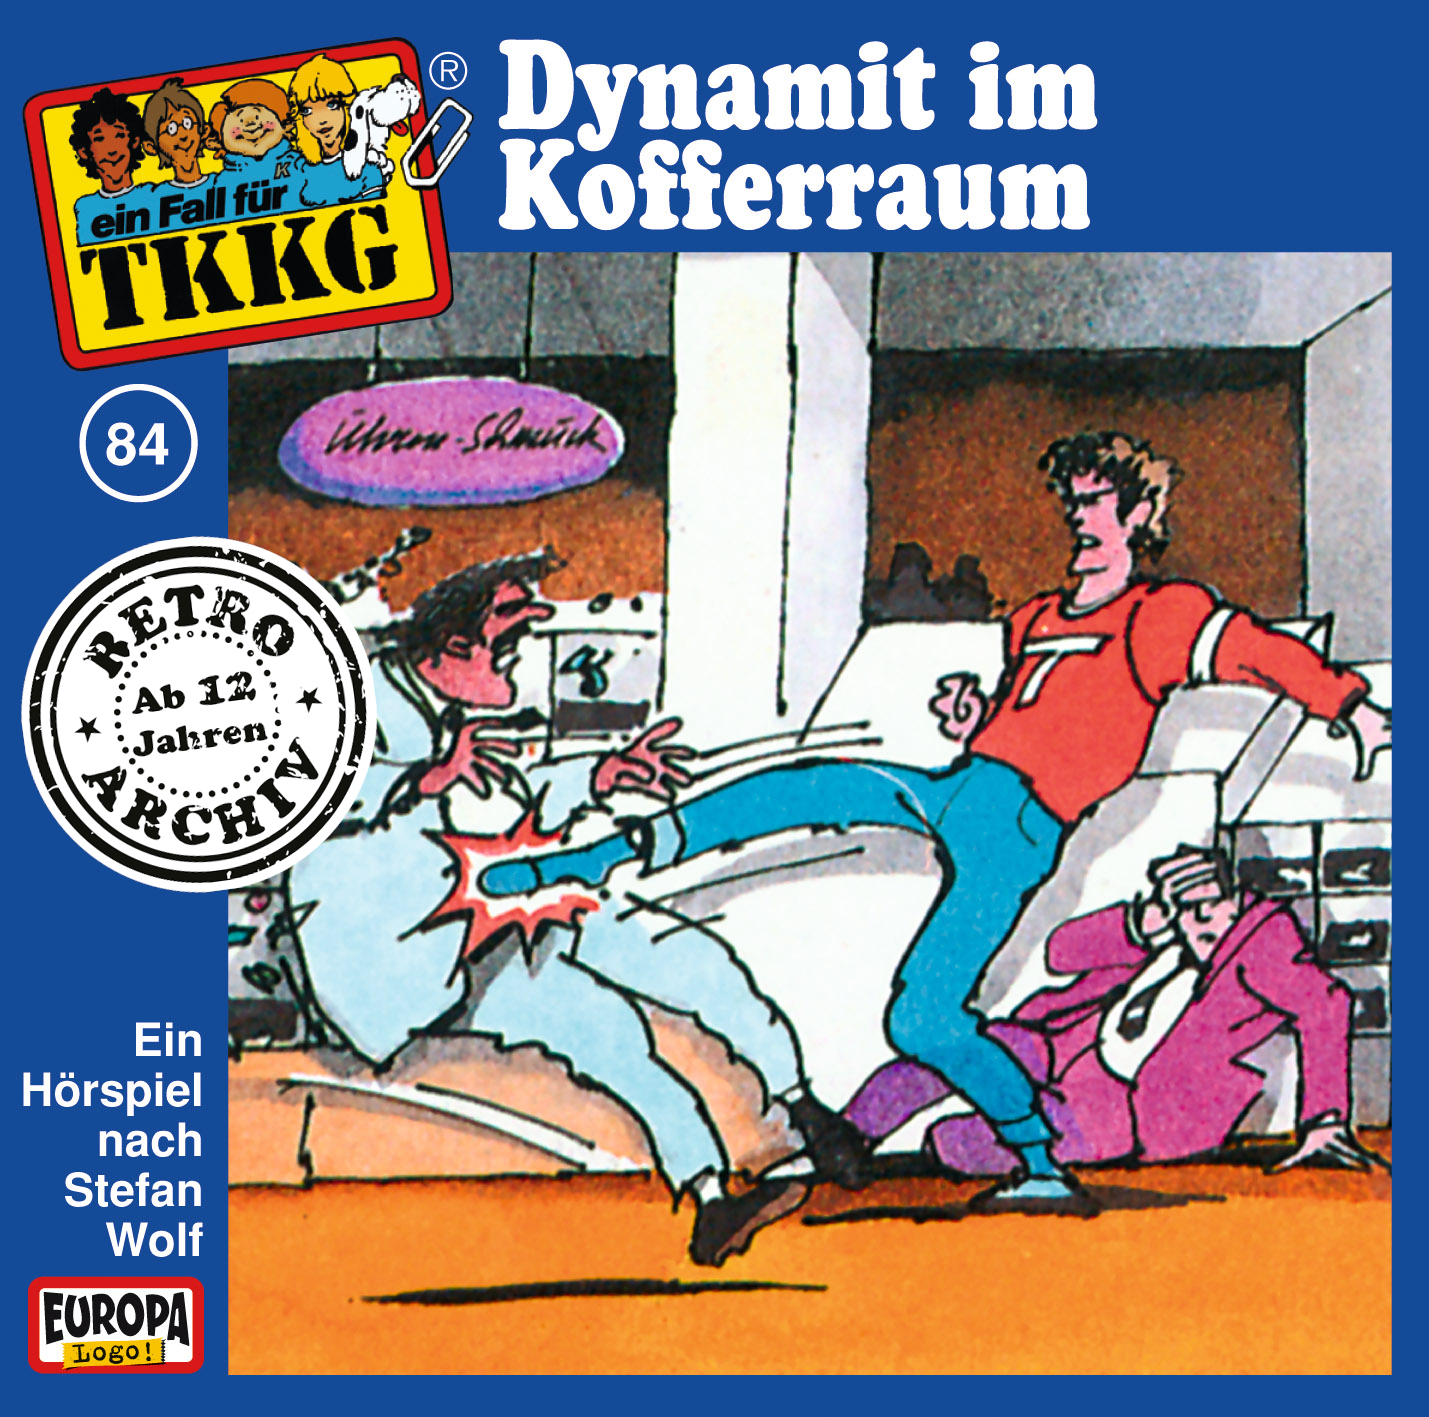 TKKG Retro-Archiv - Dynamit im Kofferraum